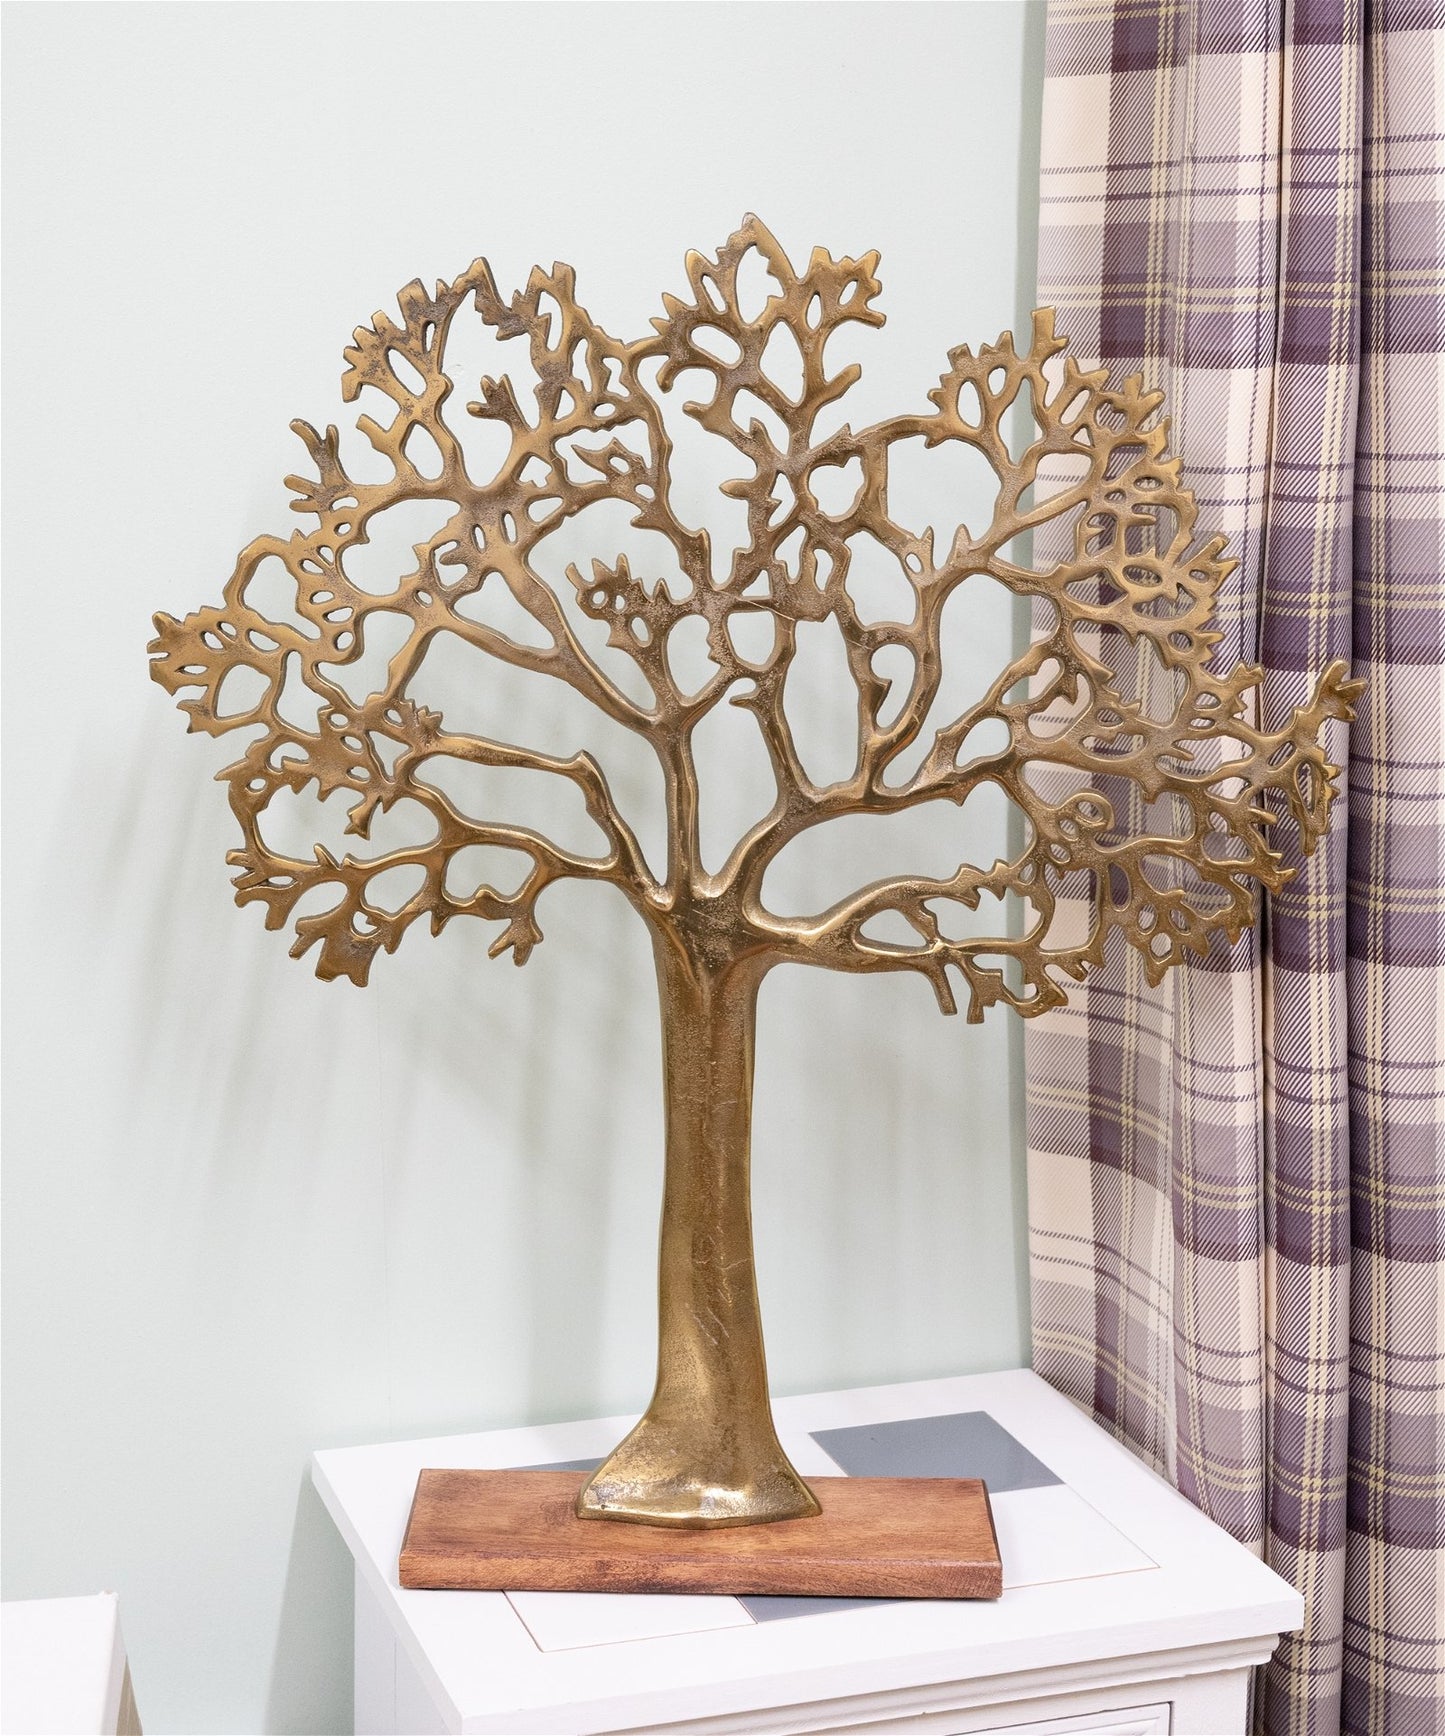 Antique Gold Tree On Wooden Base 62cm